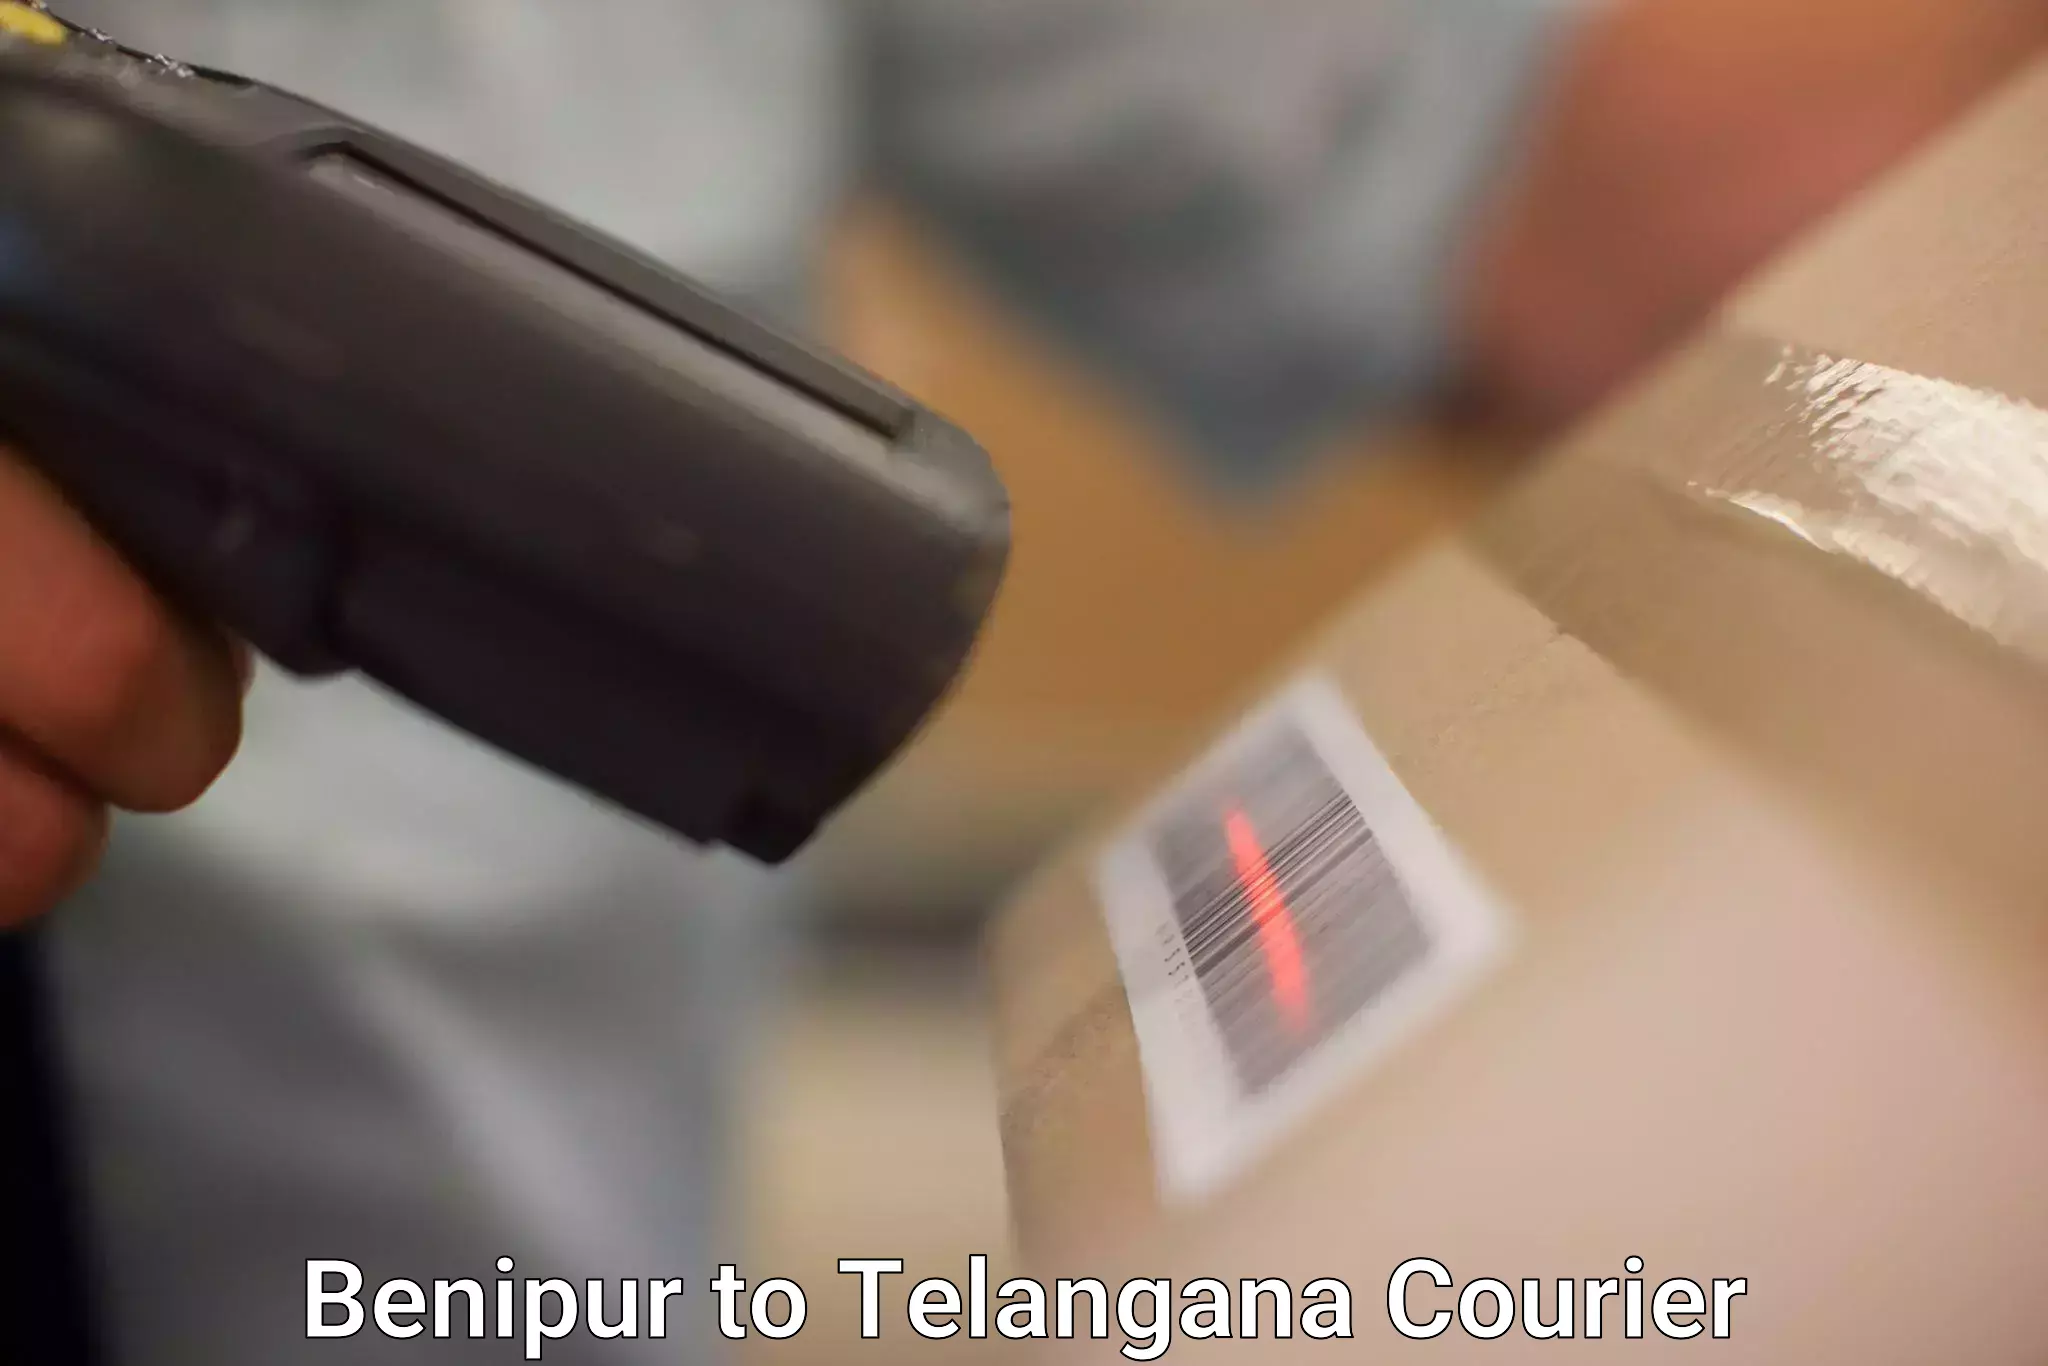 Easy return solutions Benipur to Manneguda